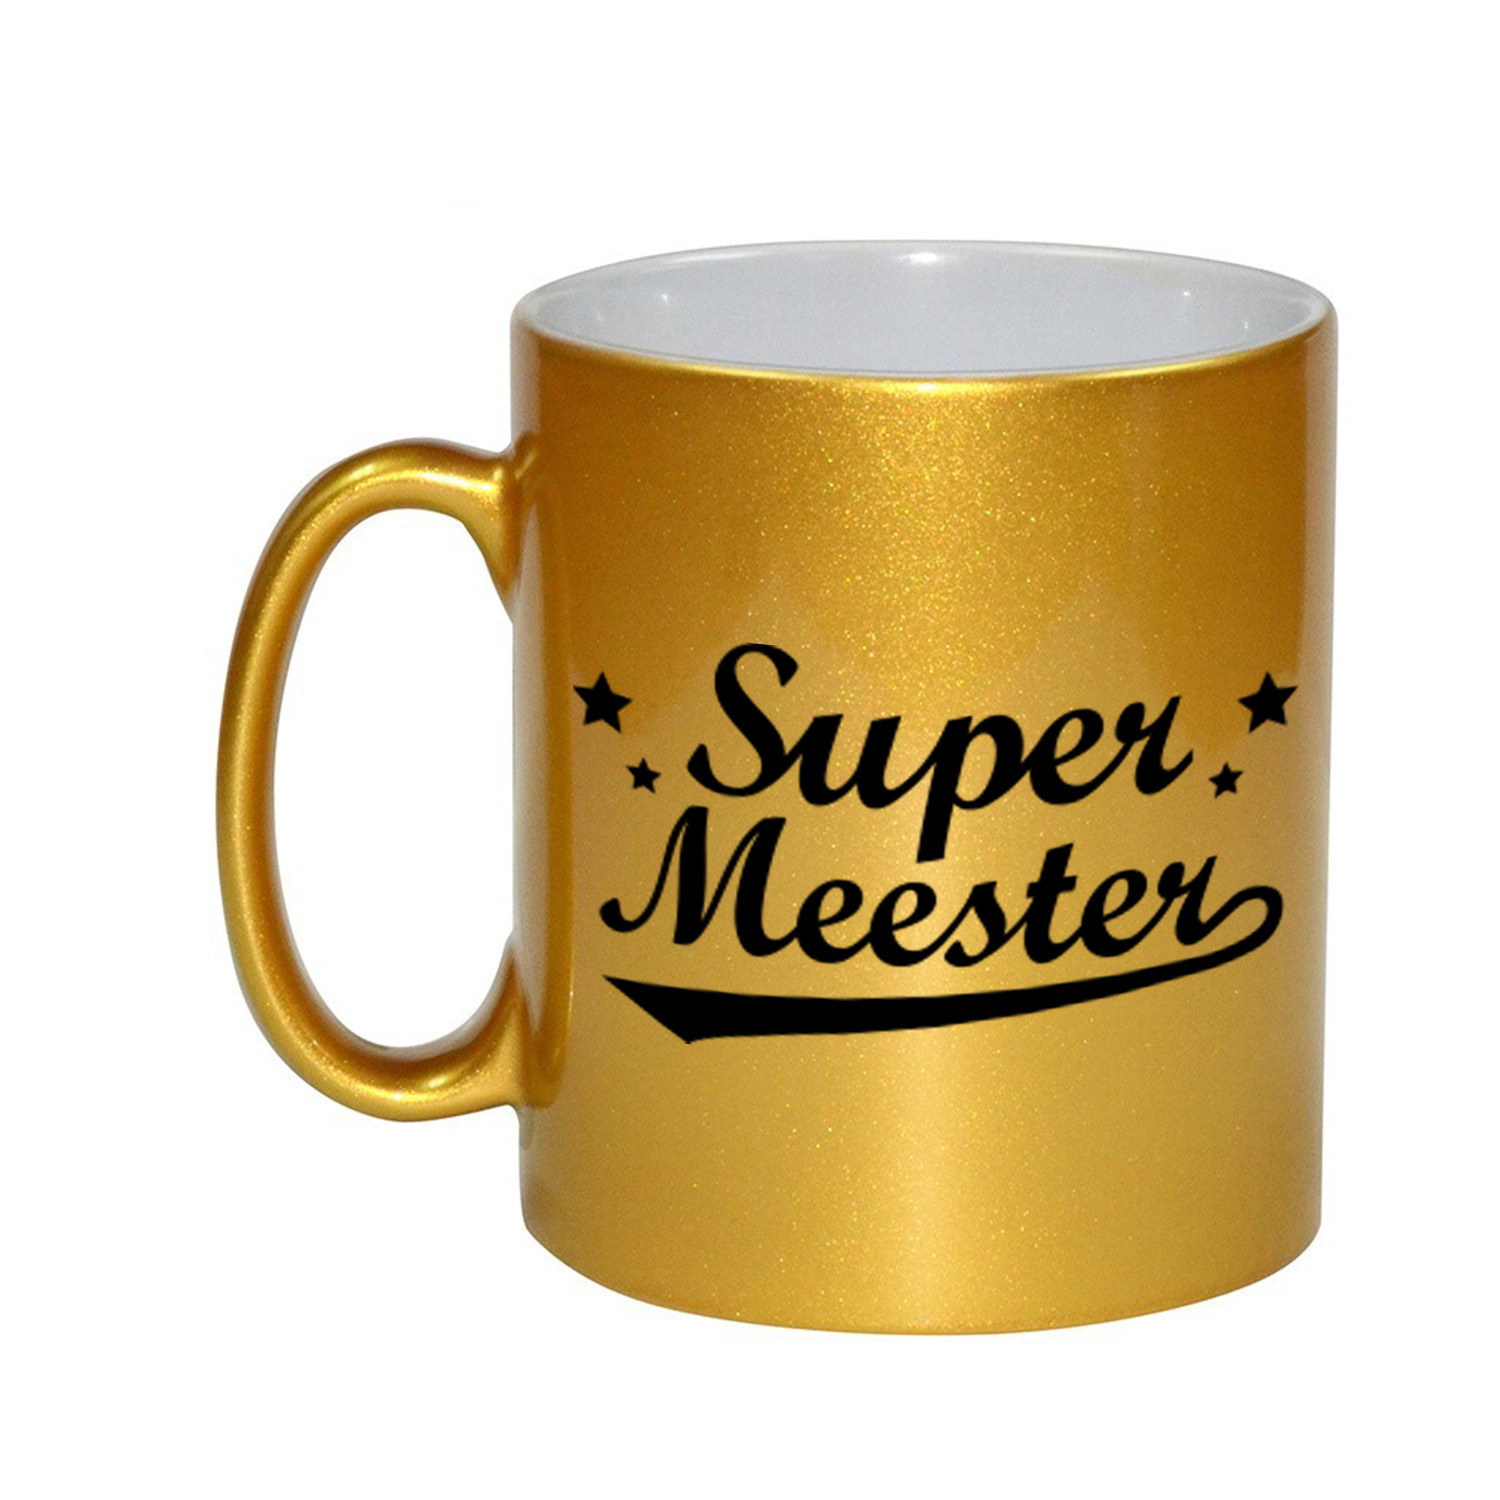 Super meester bedankt gouden mok / beker 330 ml